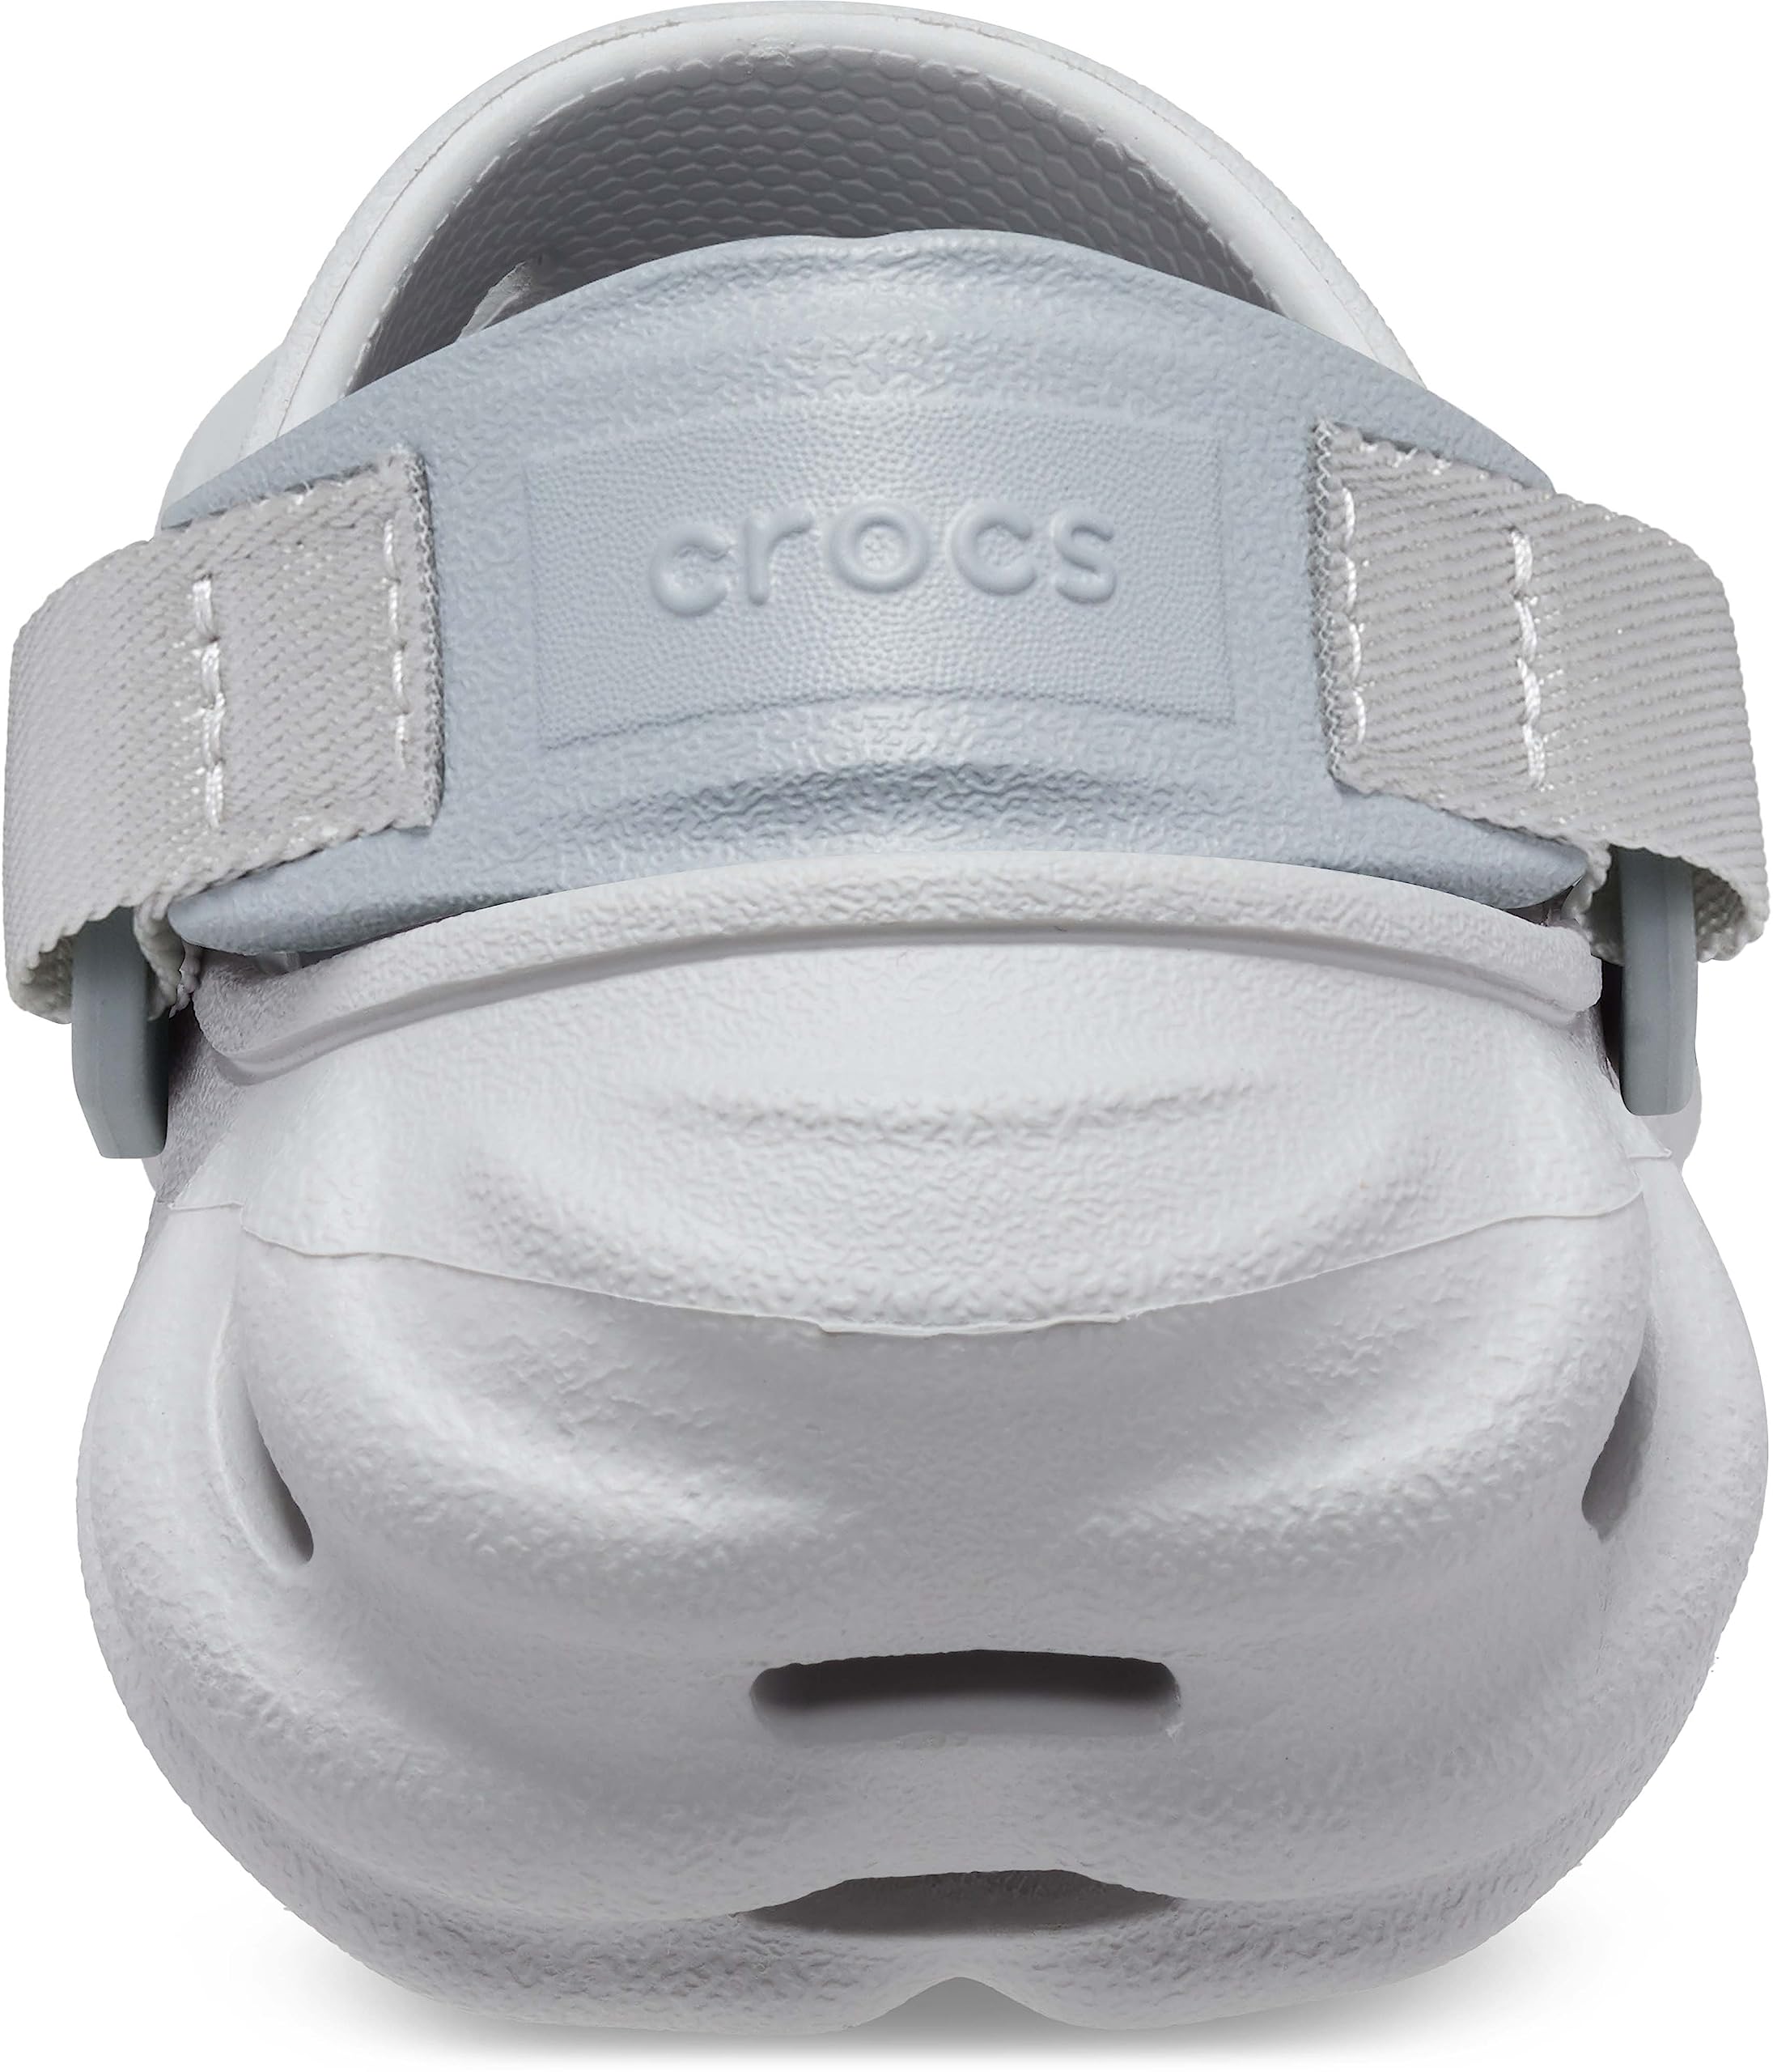 Crocs Unisex-Child Kids' Echo Clog